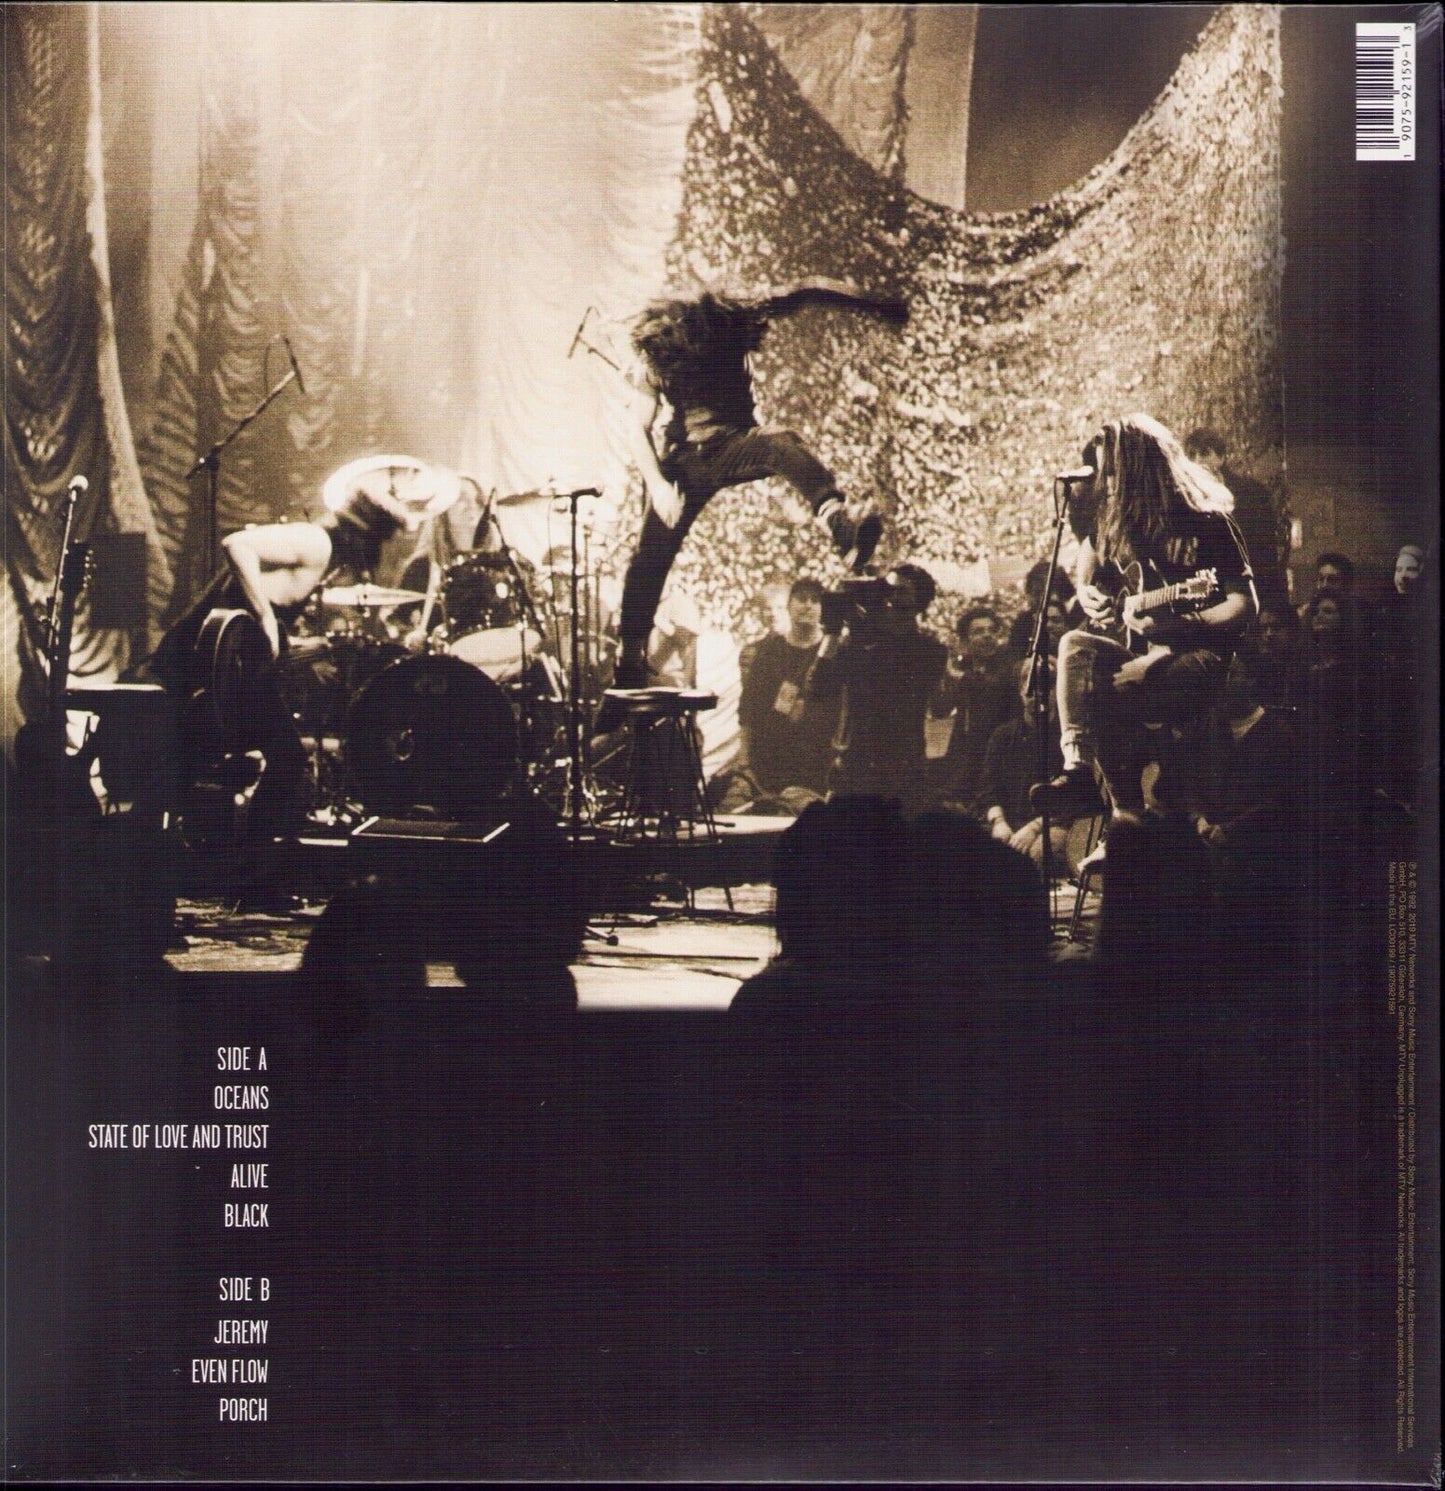 Pearl Jam - MTV Unplugged Vinyl LP